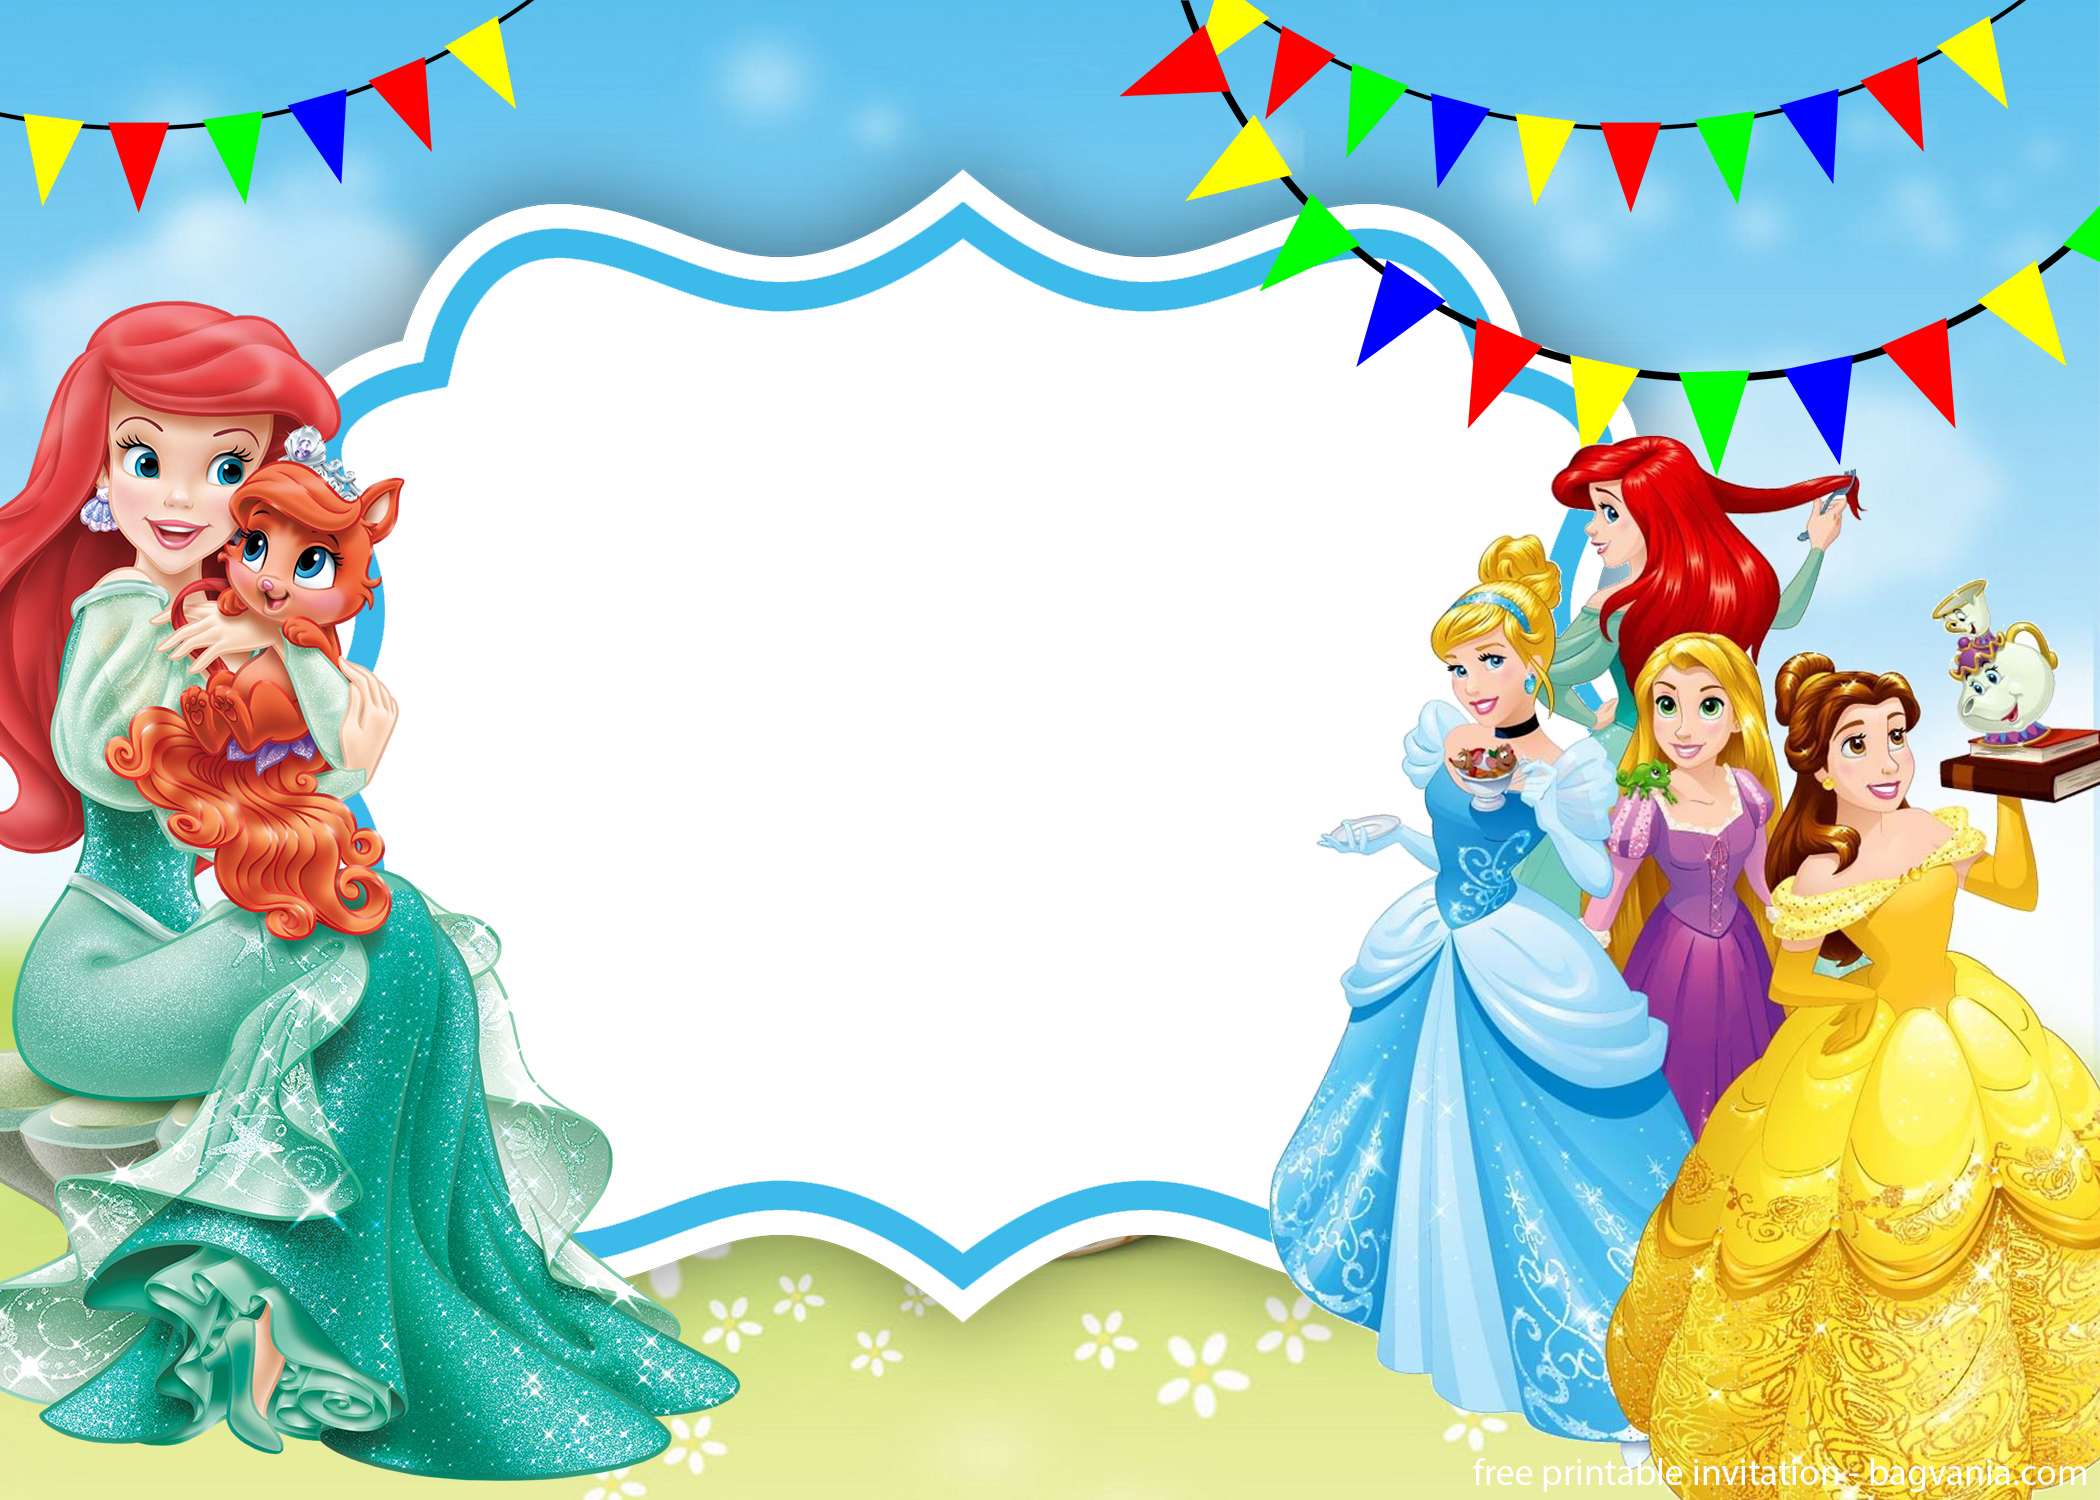 Golden Disney Princesses Invitation Template | FREE Printable Birthday